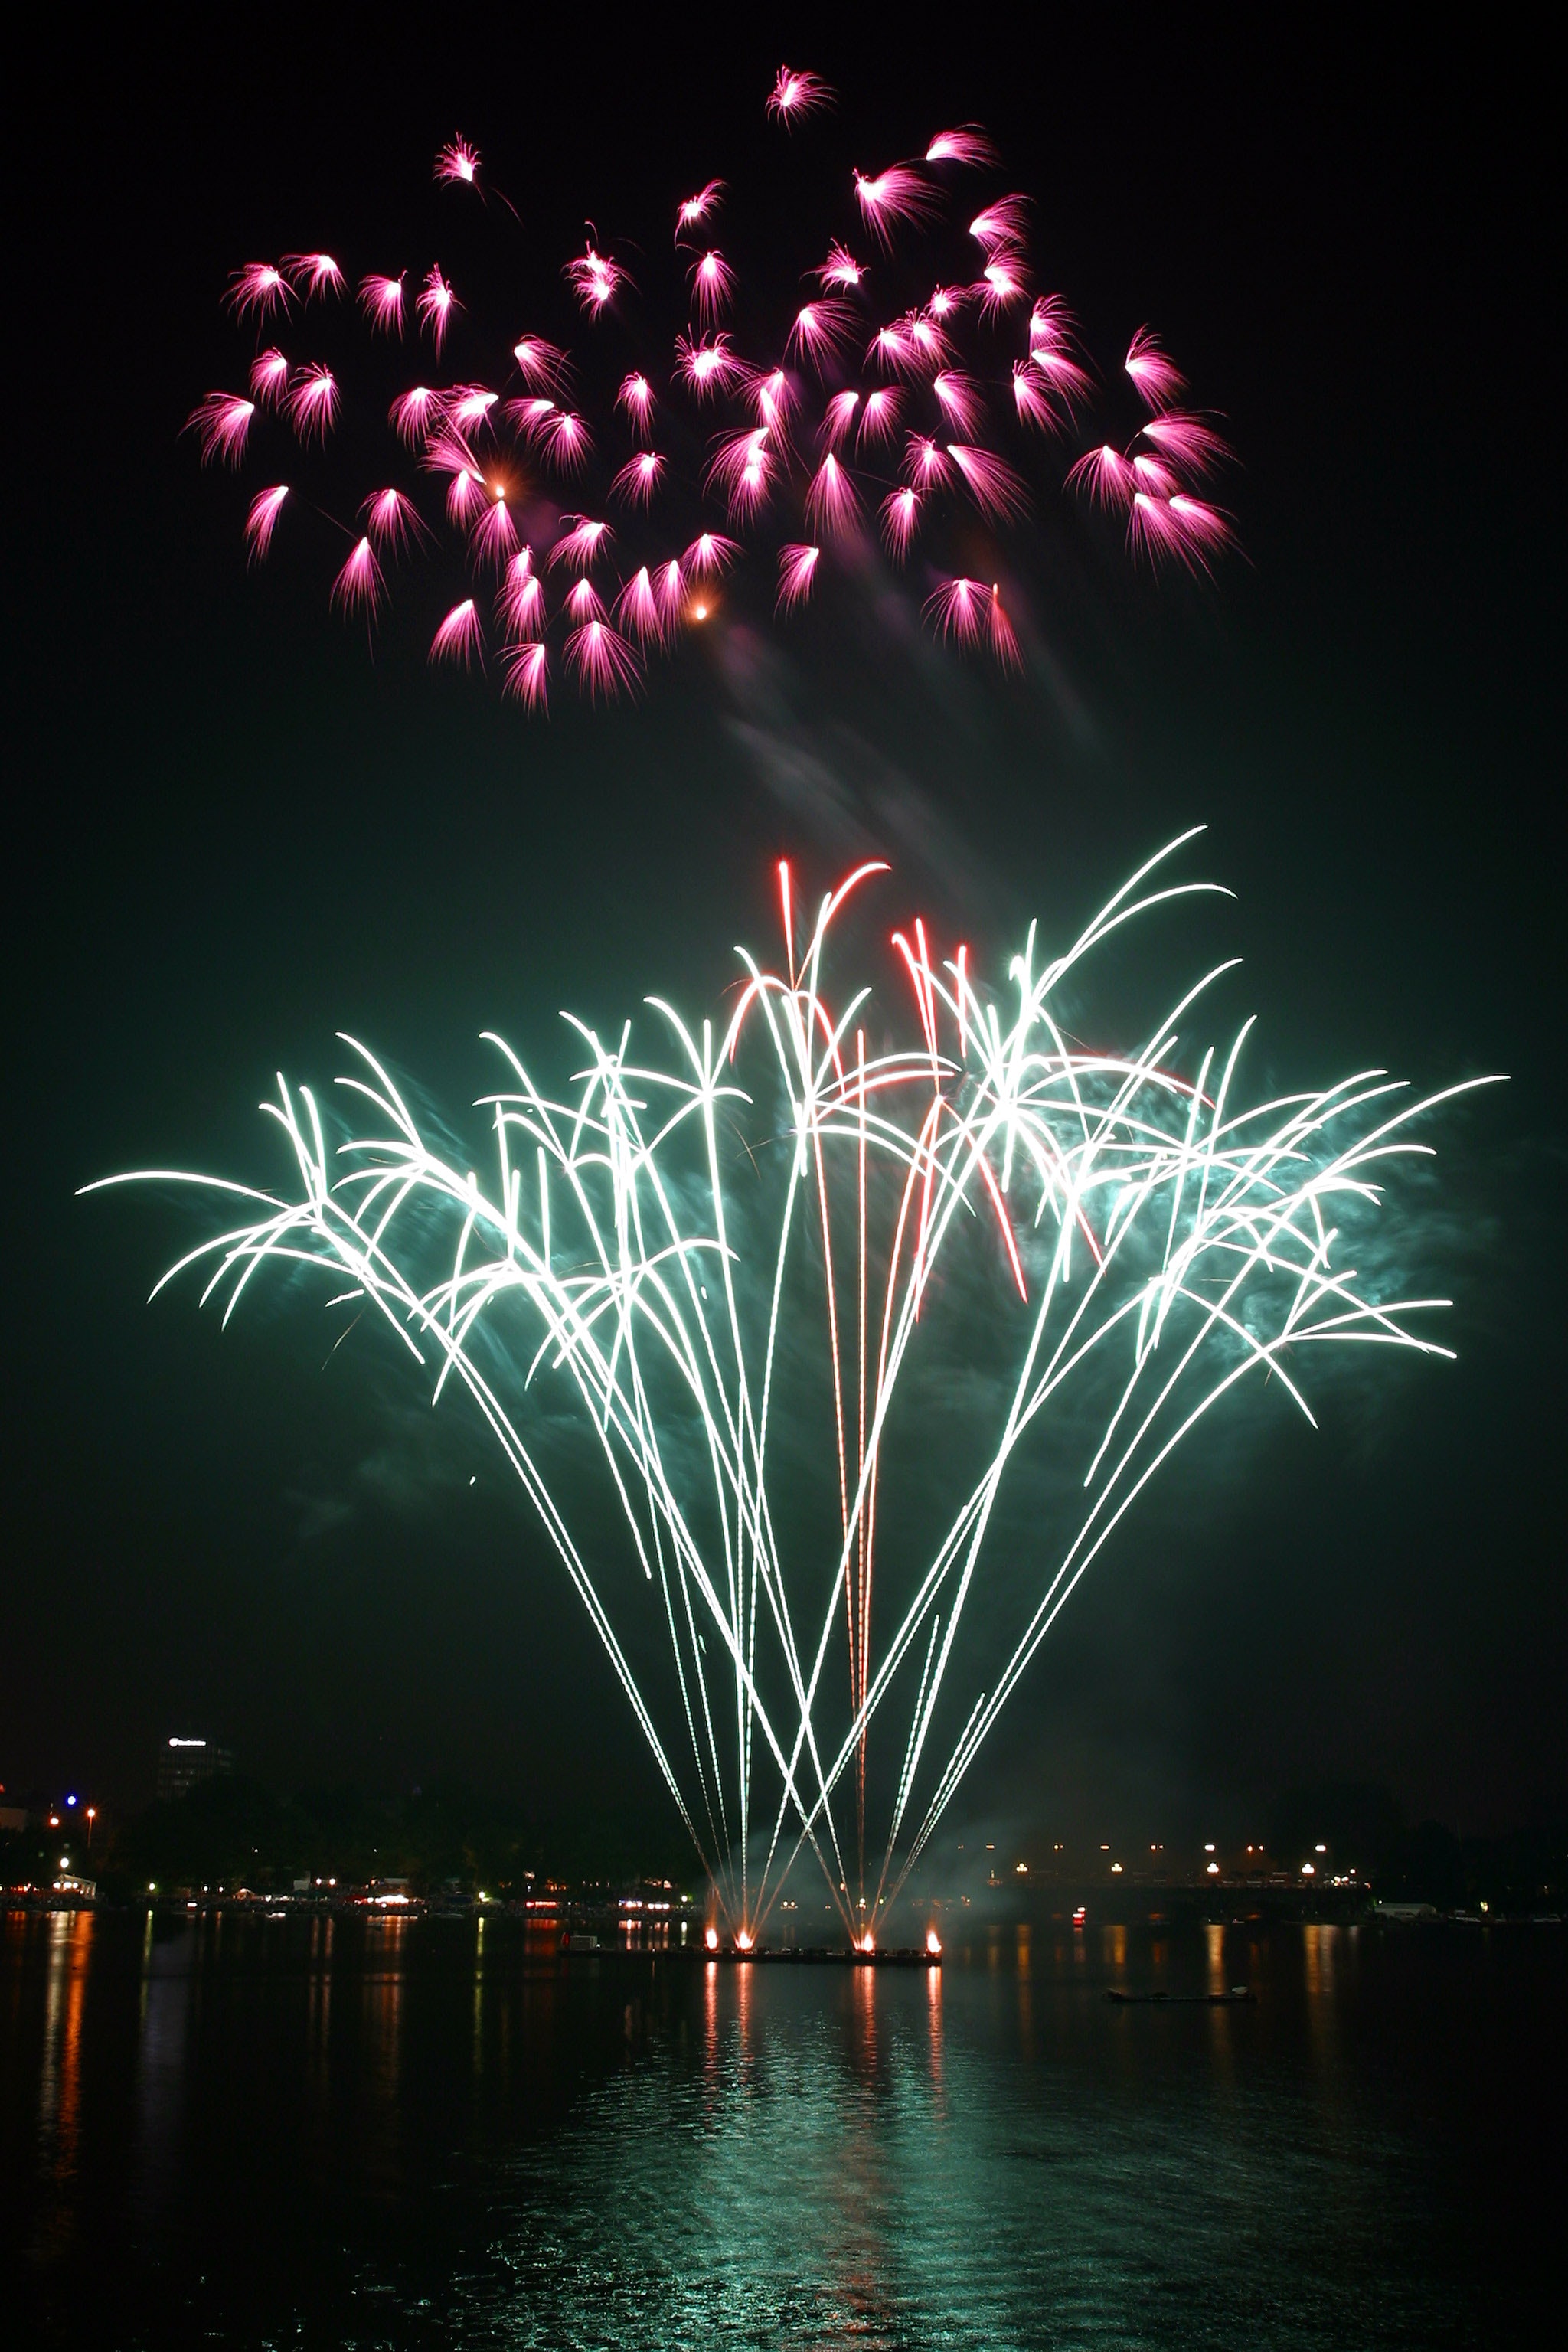 Fireworks display during nighttime photo